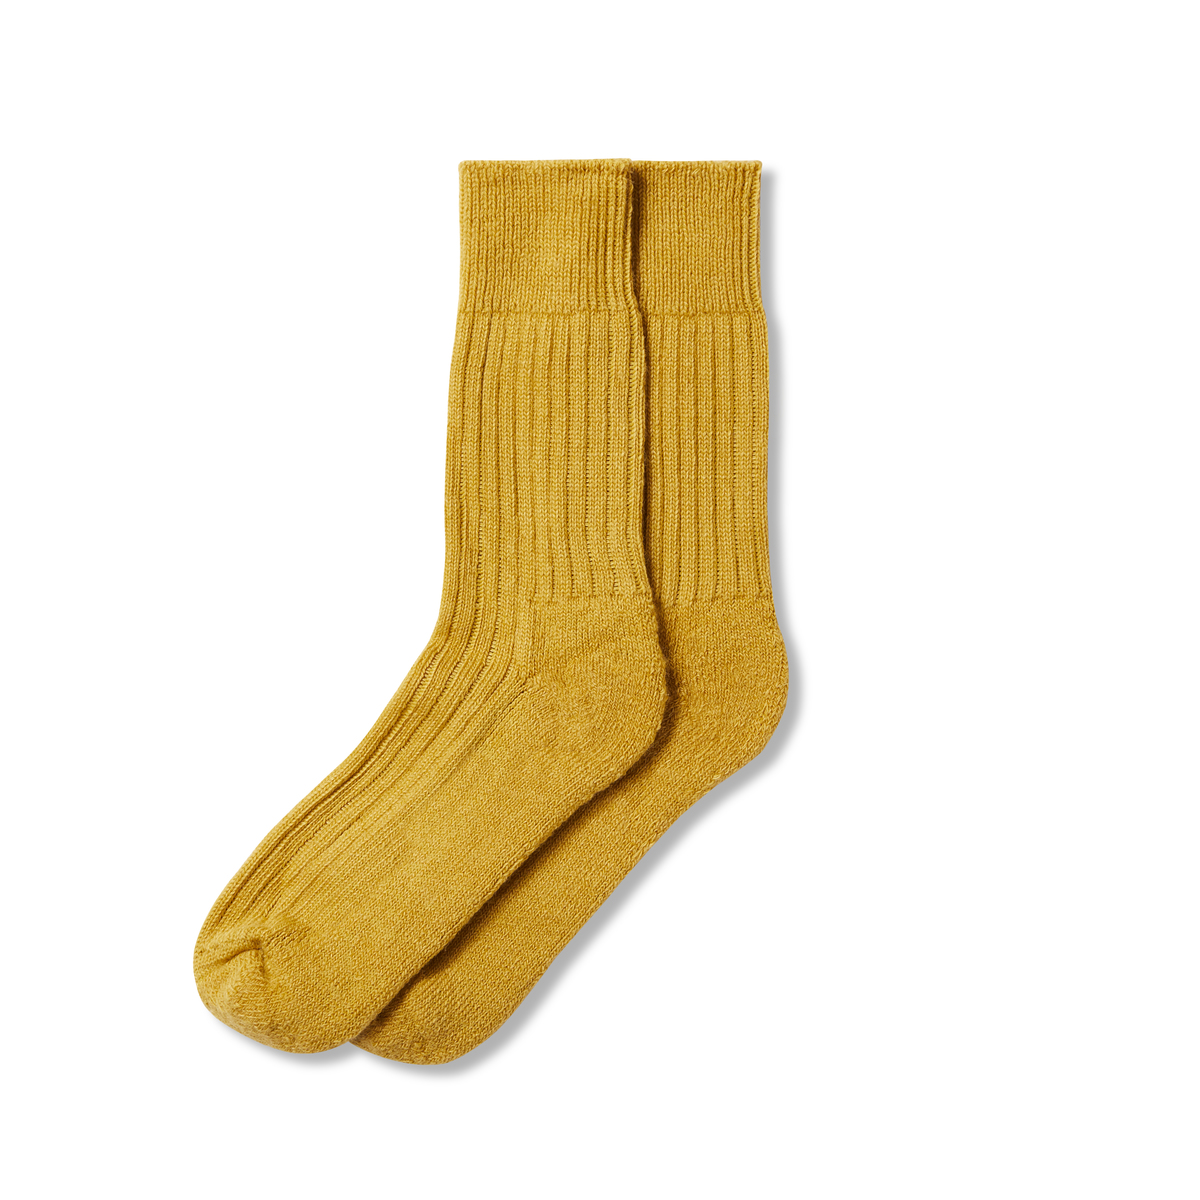 Mohair Socks > The Holkham | The Cambridge Sock Company